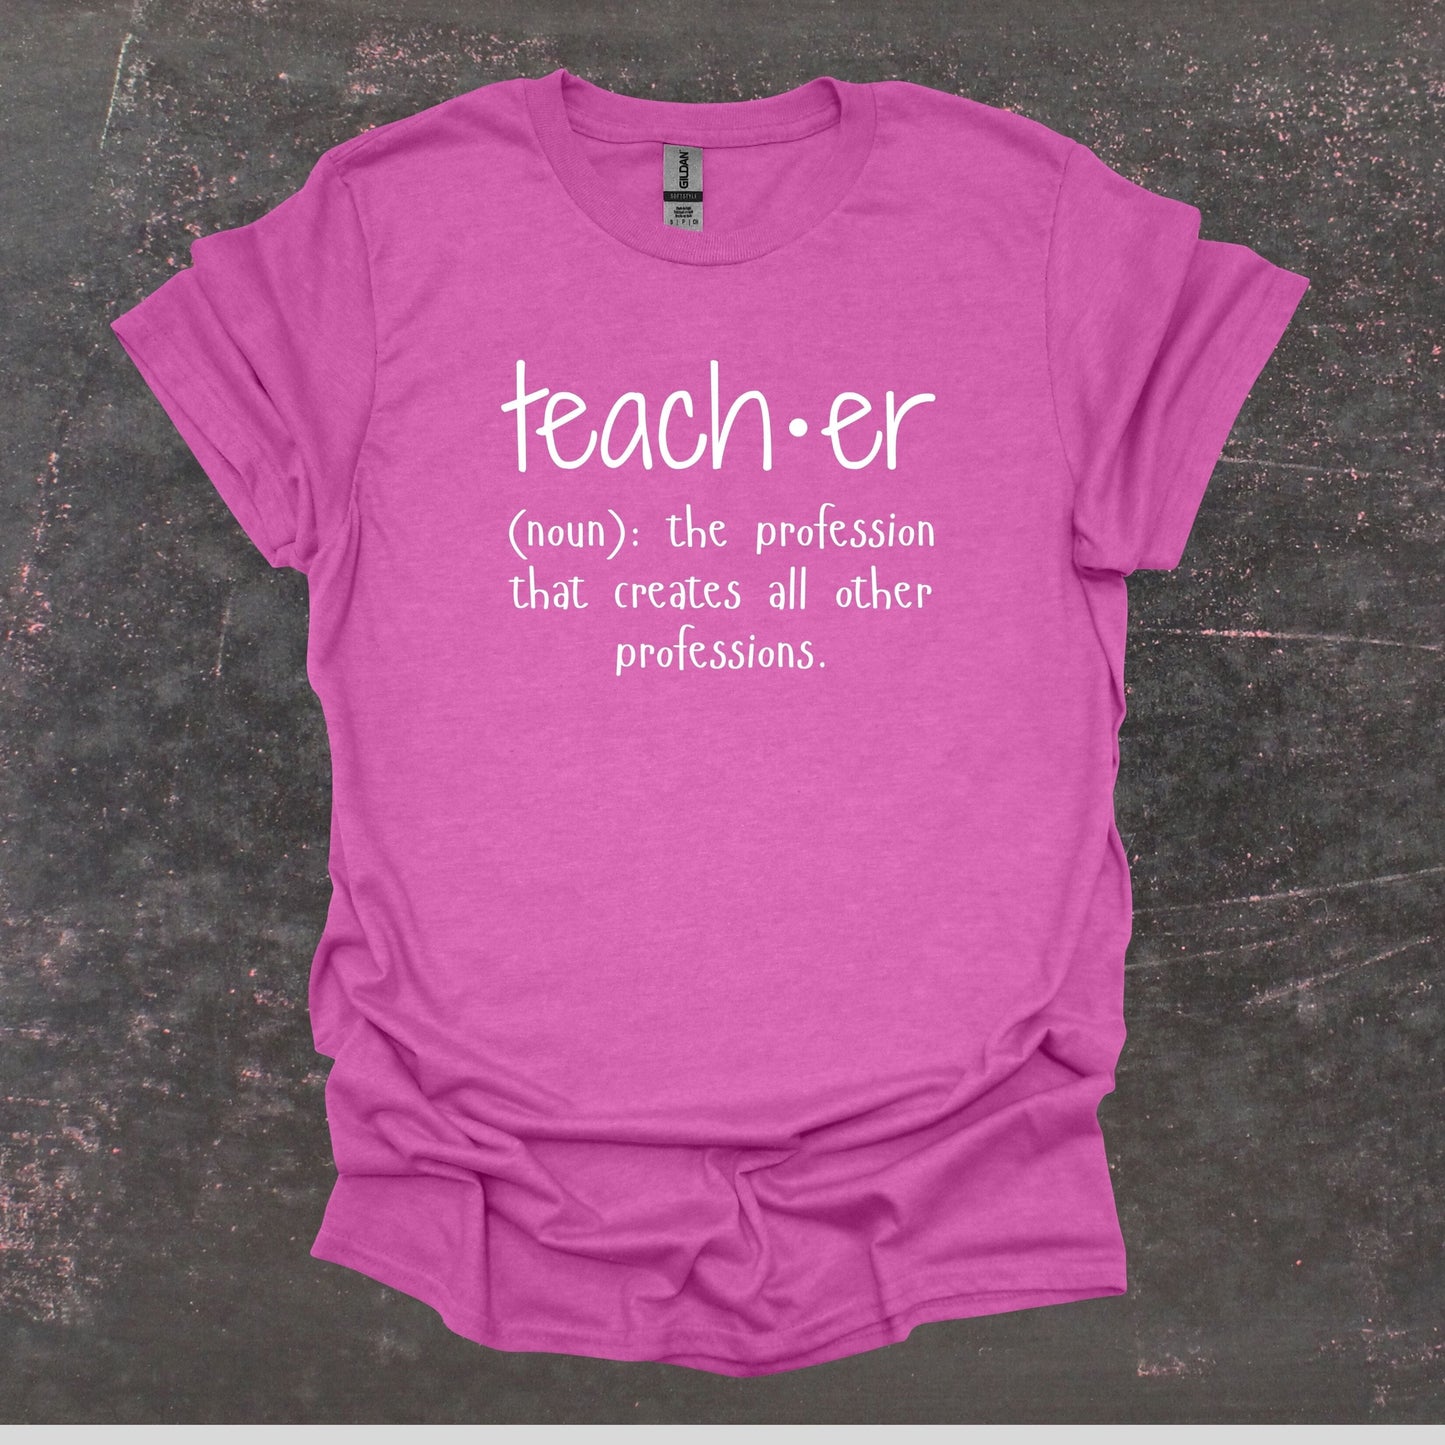 Teacher Definition - Teacher T Shirt - Adult Tee Shirts T-Shirts Graphic Avenue Heather Berry Adult Small 